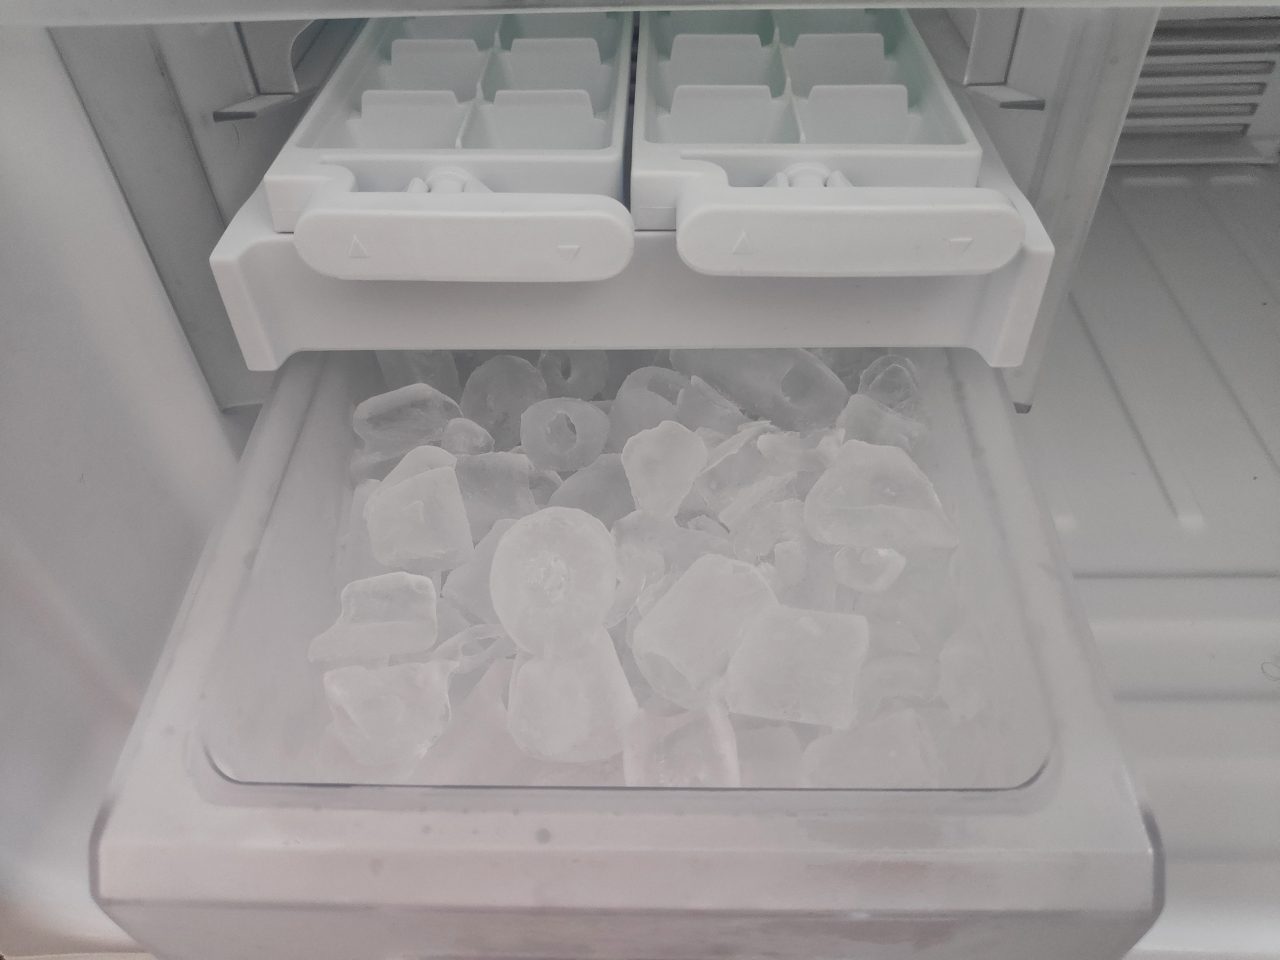 ice-maker-container-in-the-refrigerator-2021-09-01-10-35-36-utc-1280x960.jpg